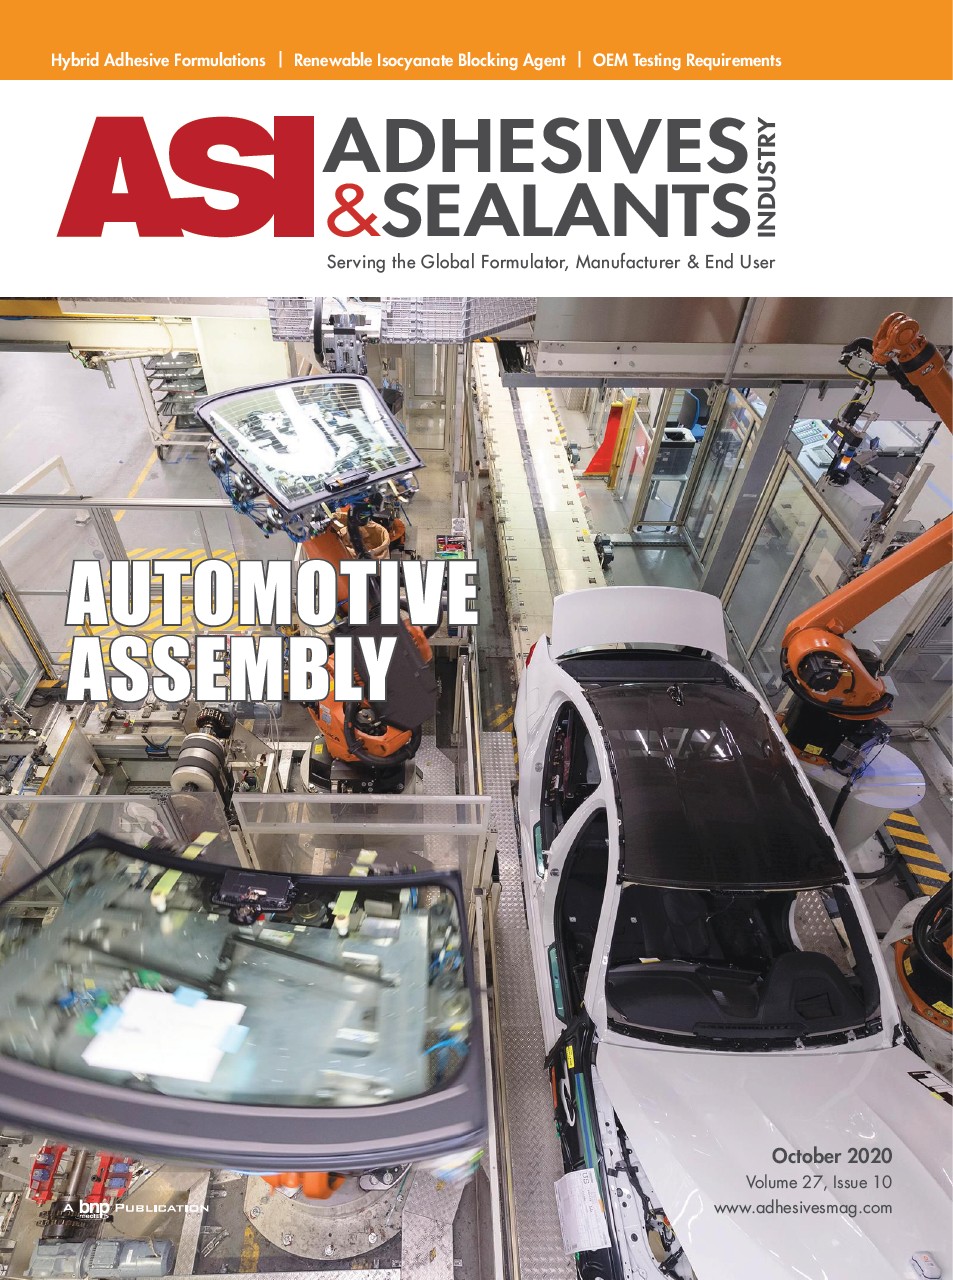 Adhesives & Sealants Industries (ASI) - Adhesives in Automotive Assembly